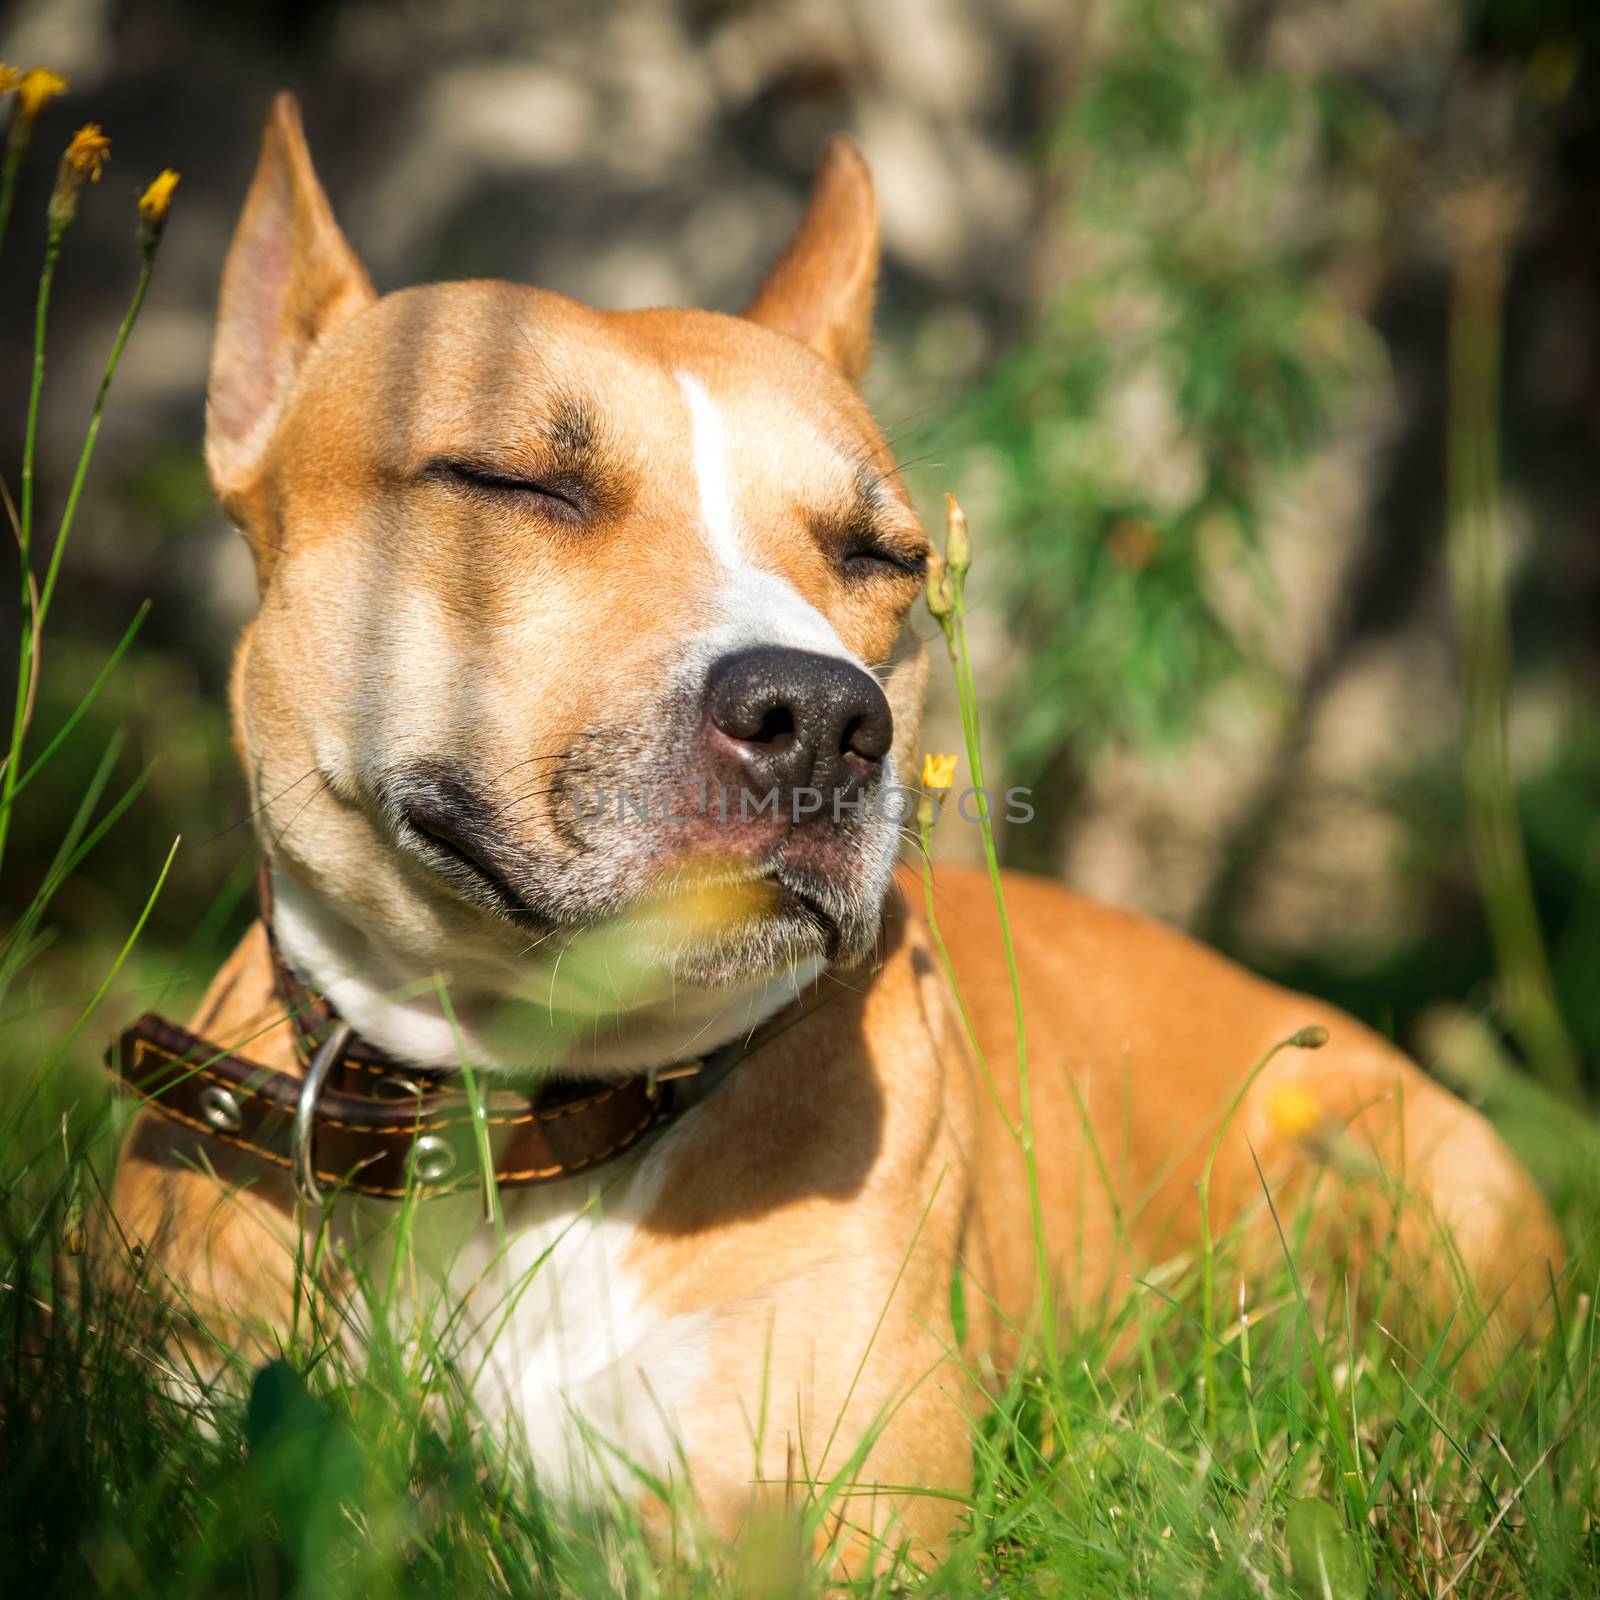 The lovely dog lies on a grass